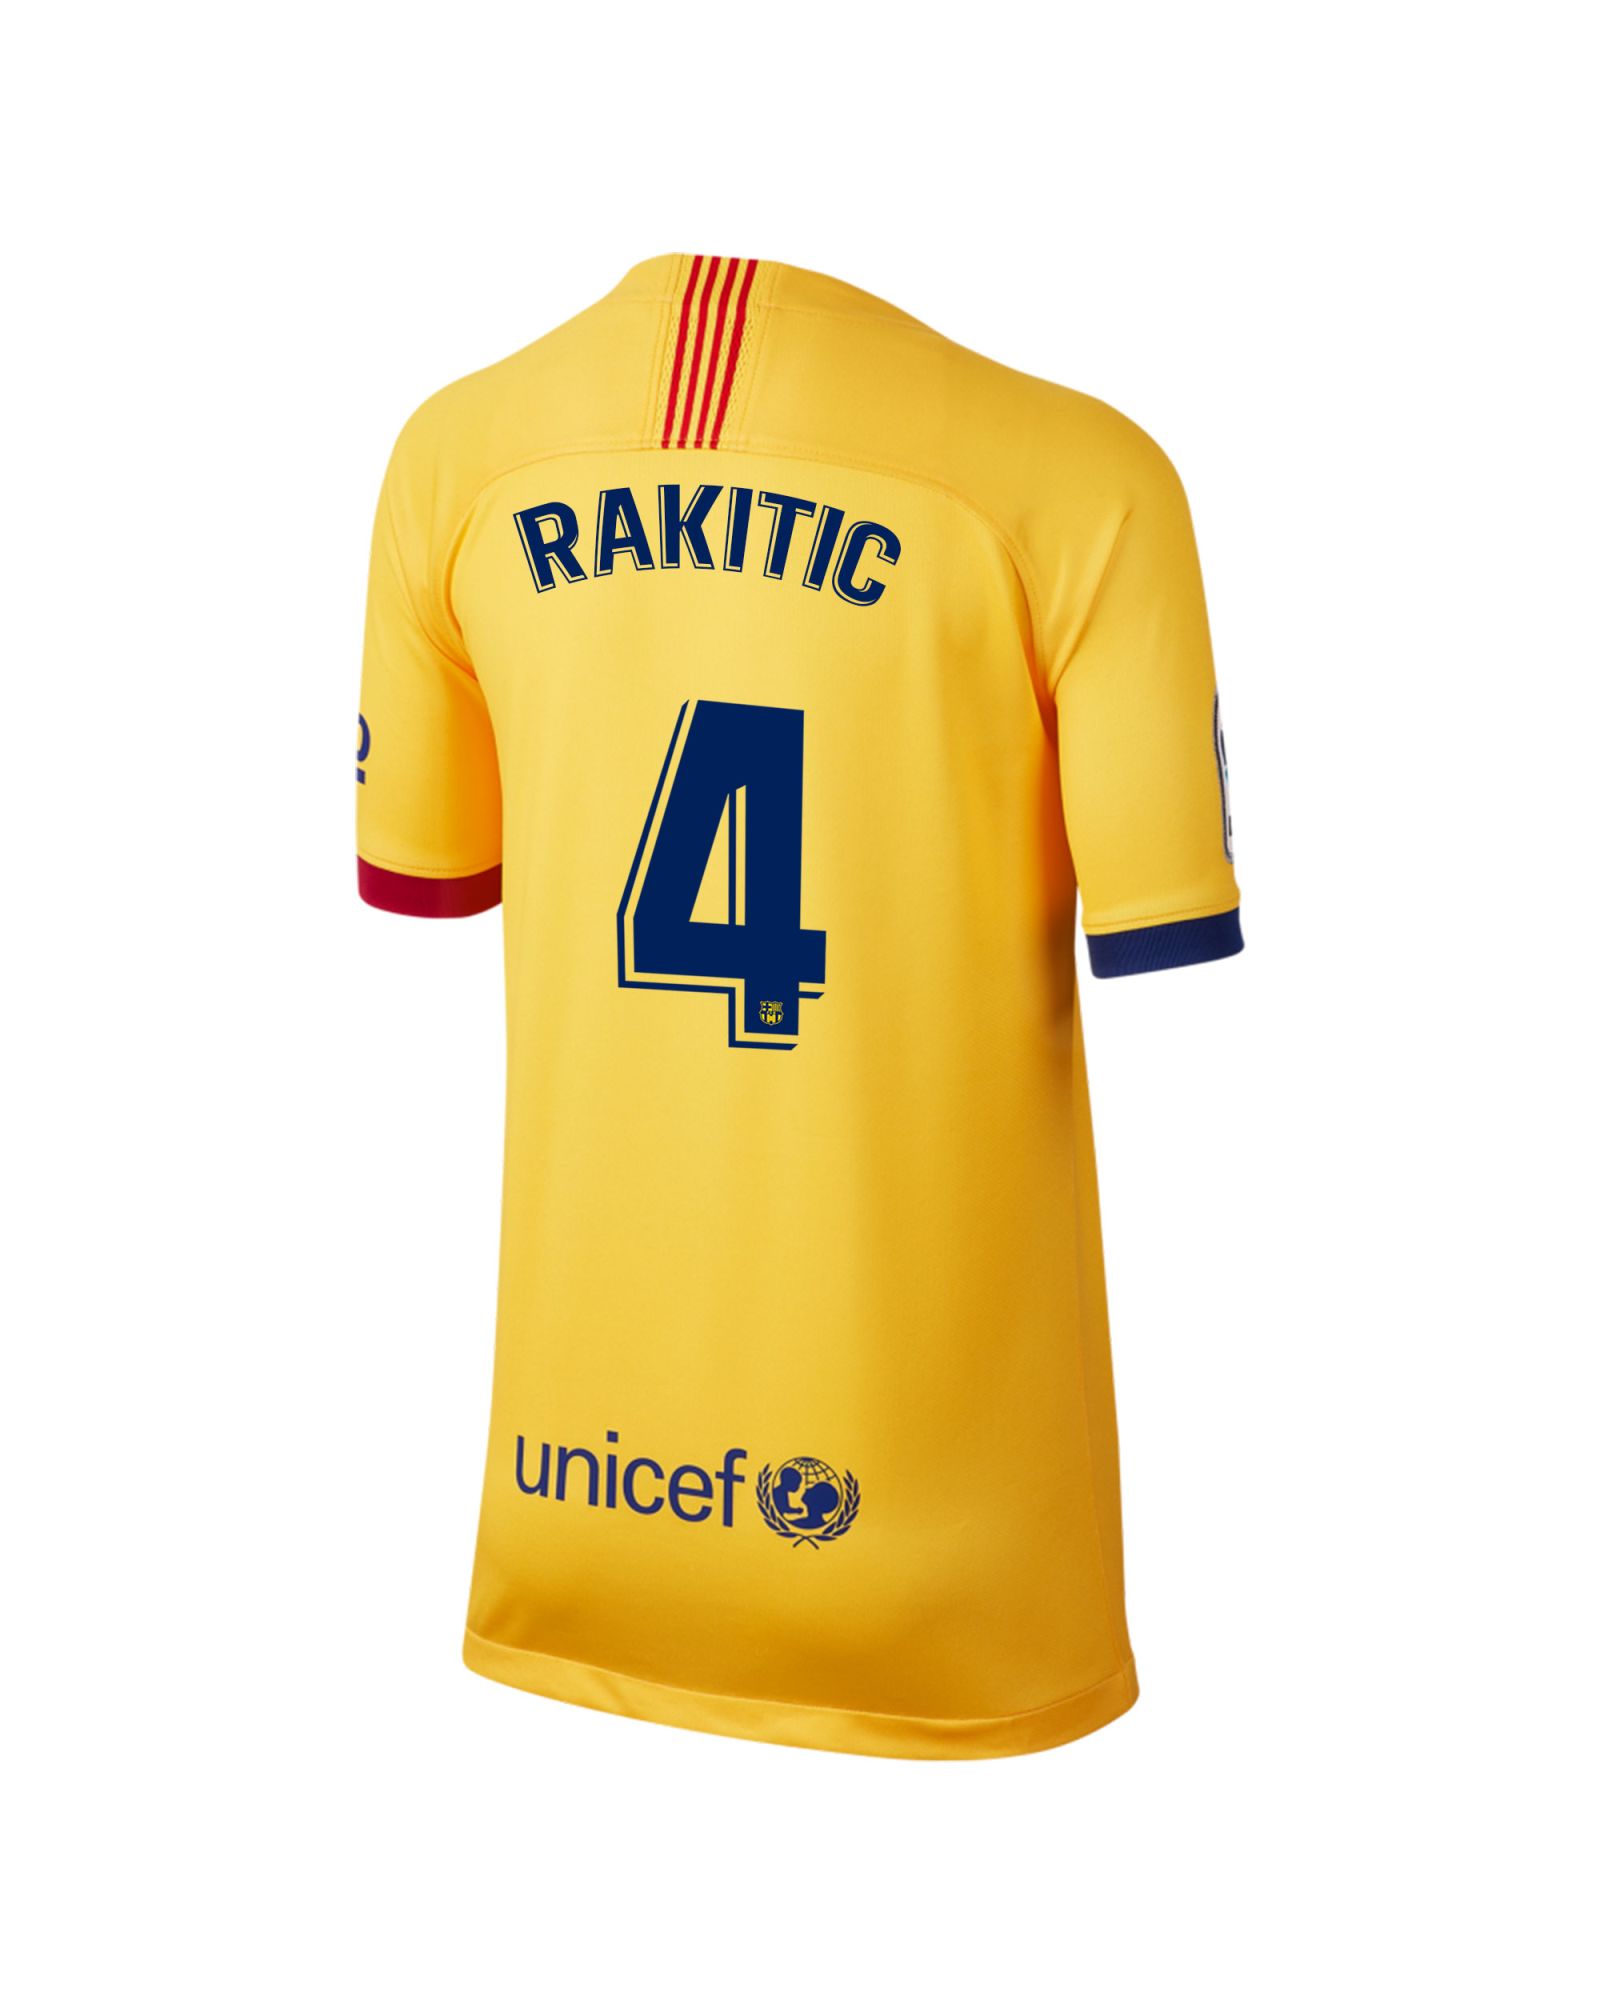 Camiseta 2ª FC Barcelona 2019/2020 Junior Rakitic